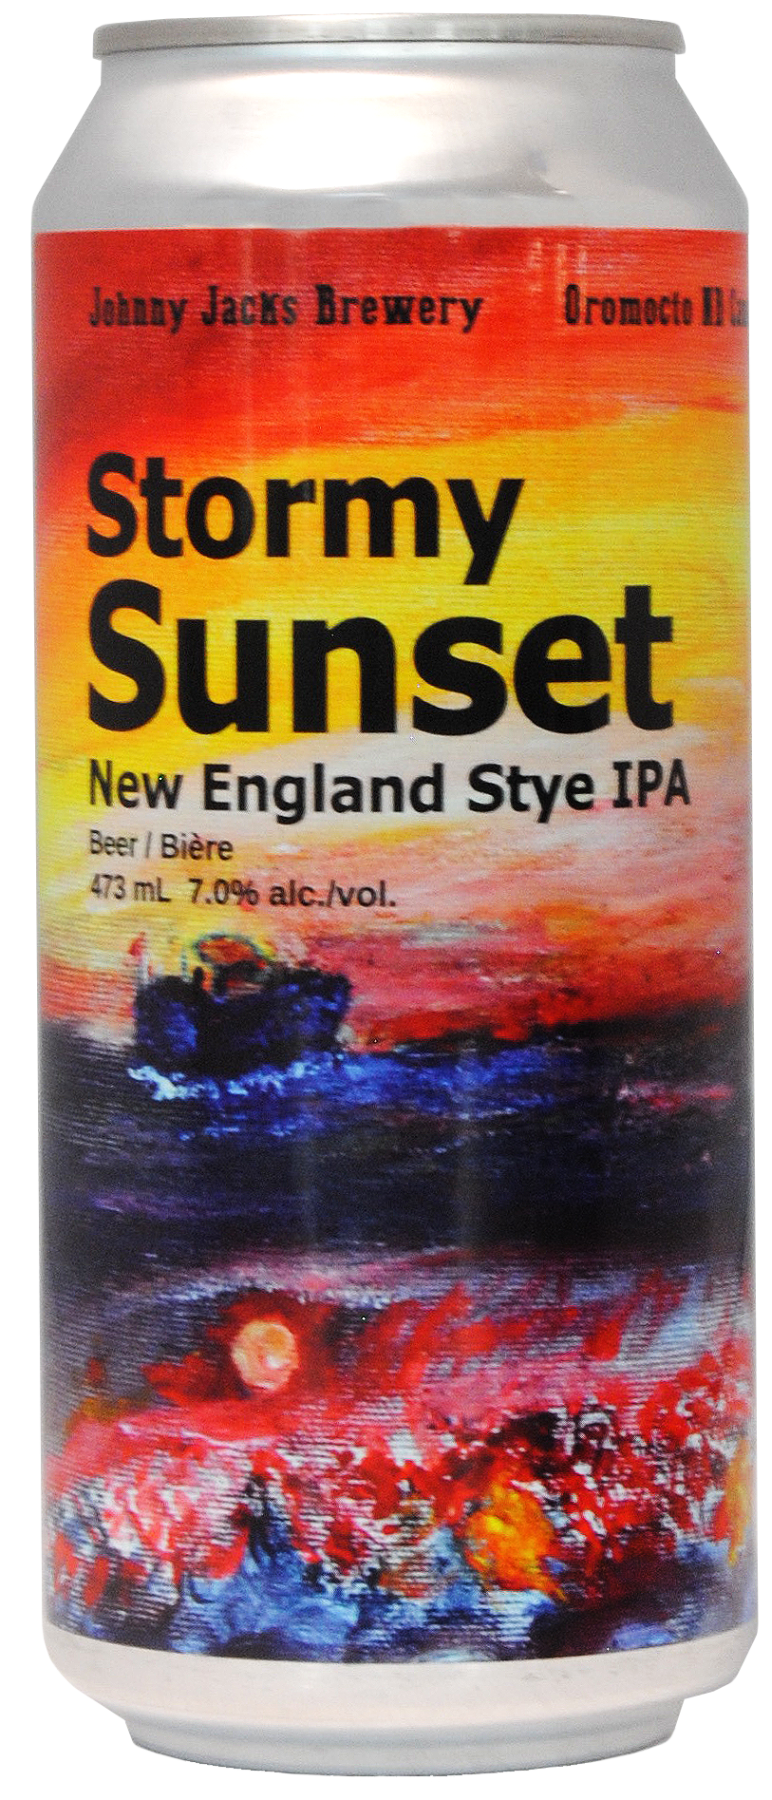 Stormy Sunset New England Style IPA